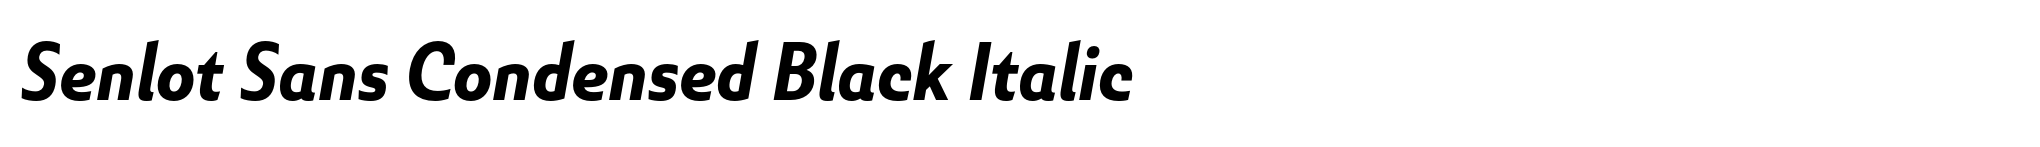 Senlot Sans Condensed Black Italic image